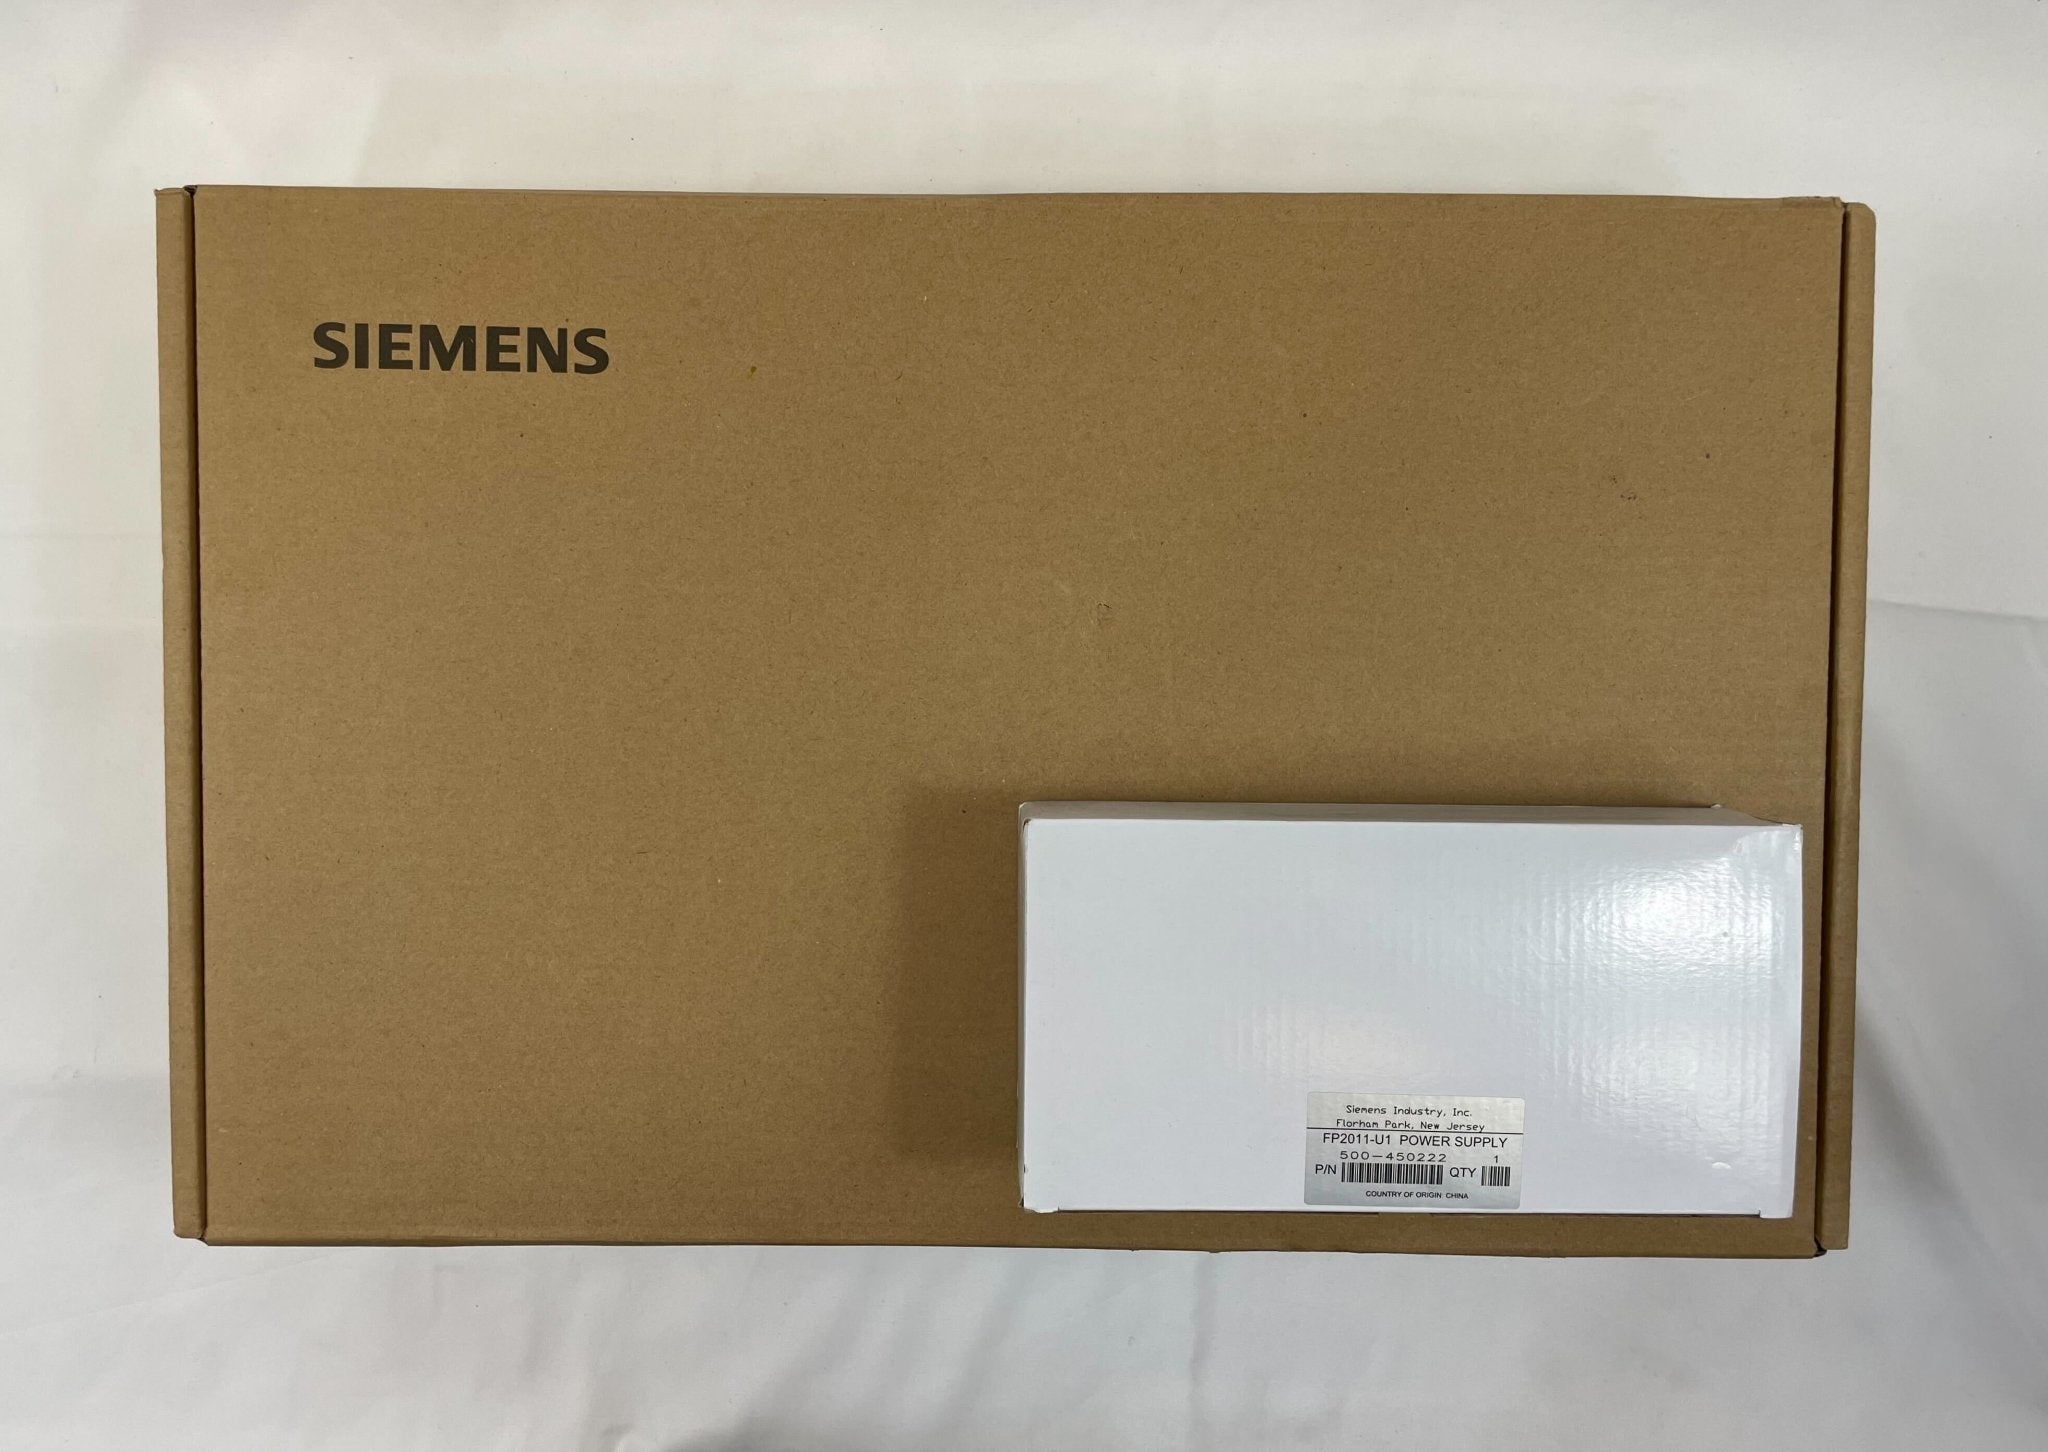 Siemens FC901-U3 - The Fire Alarm Supplier